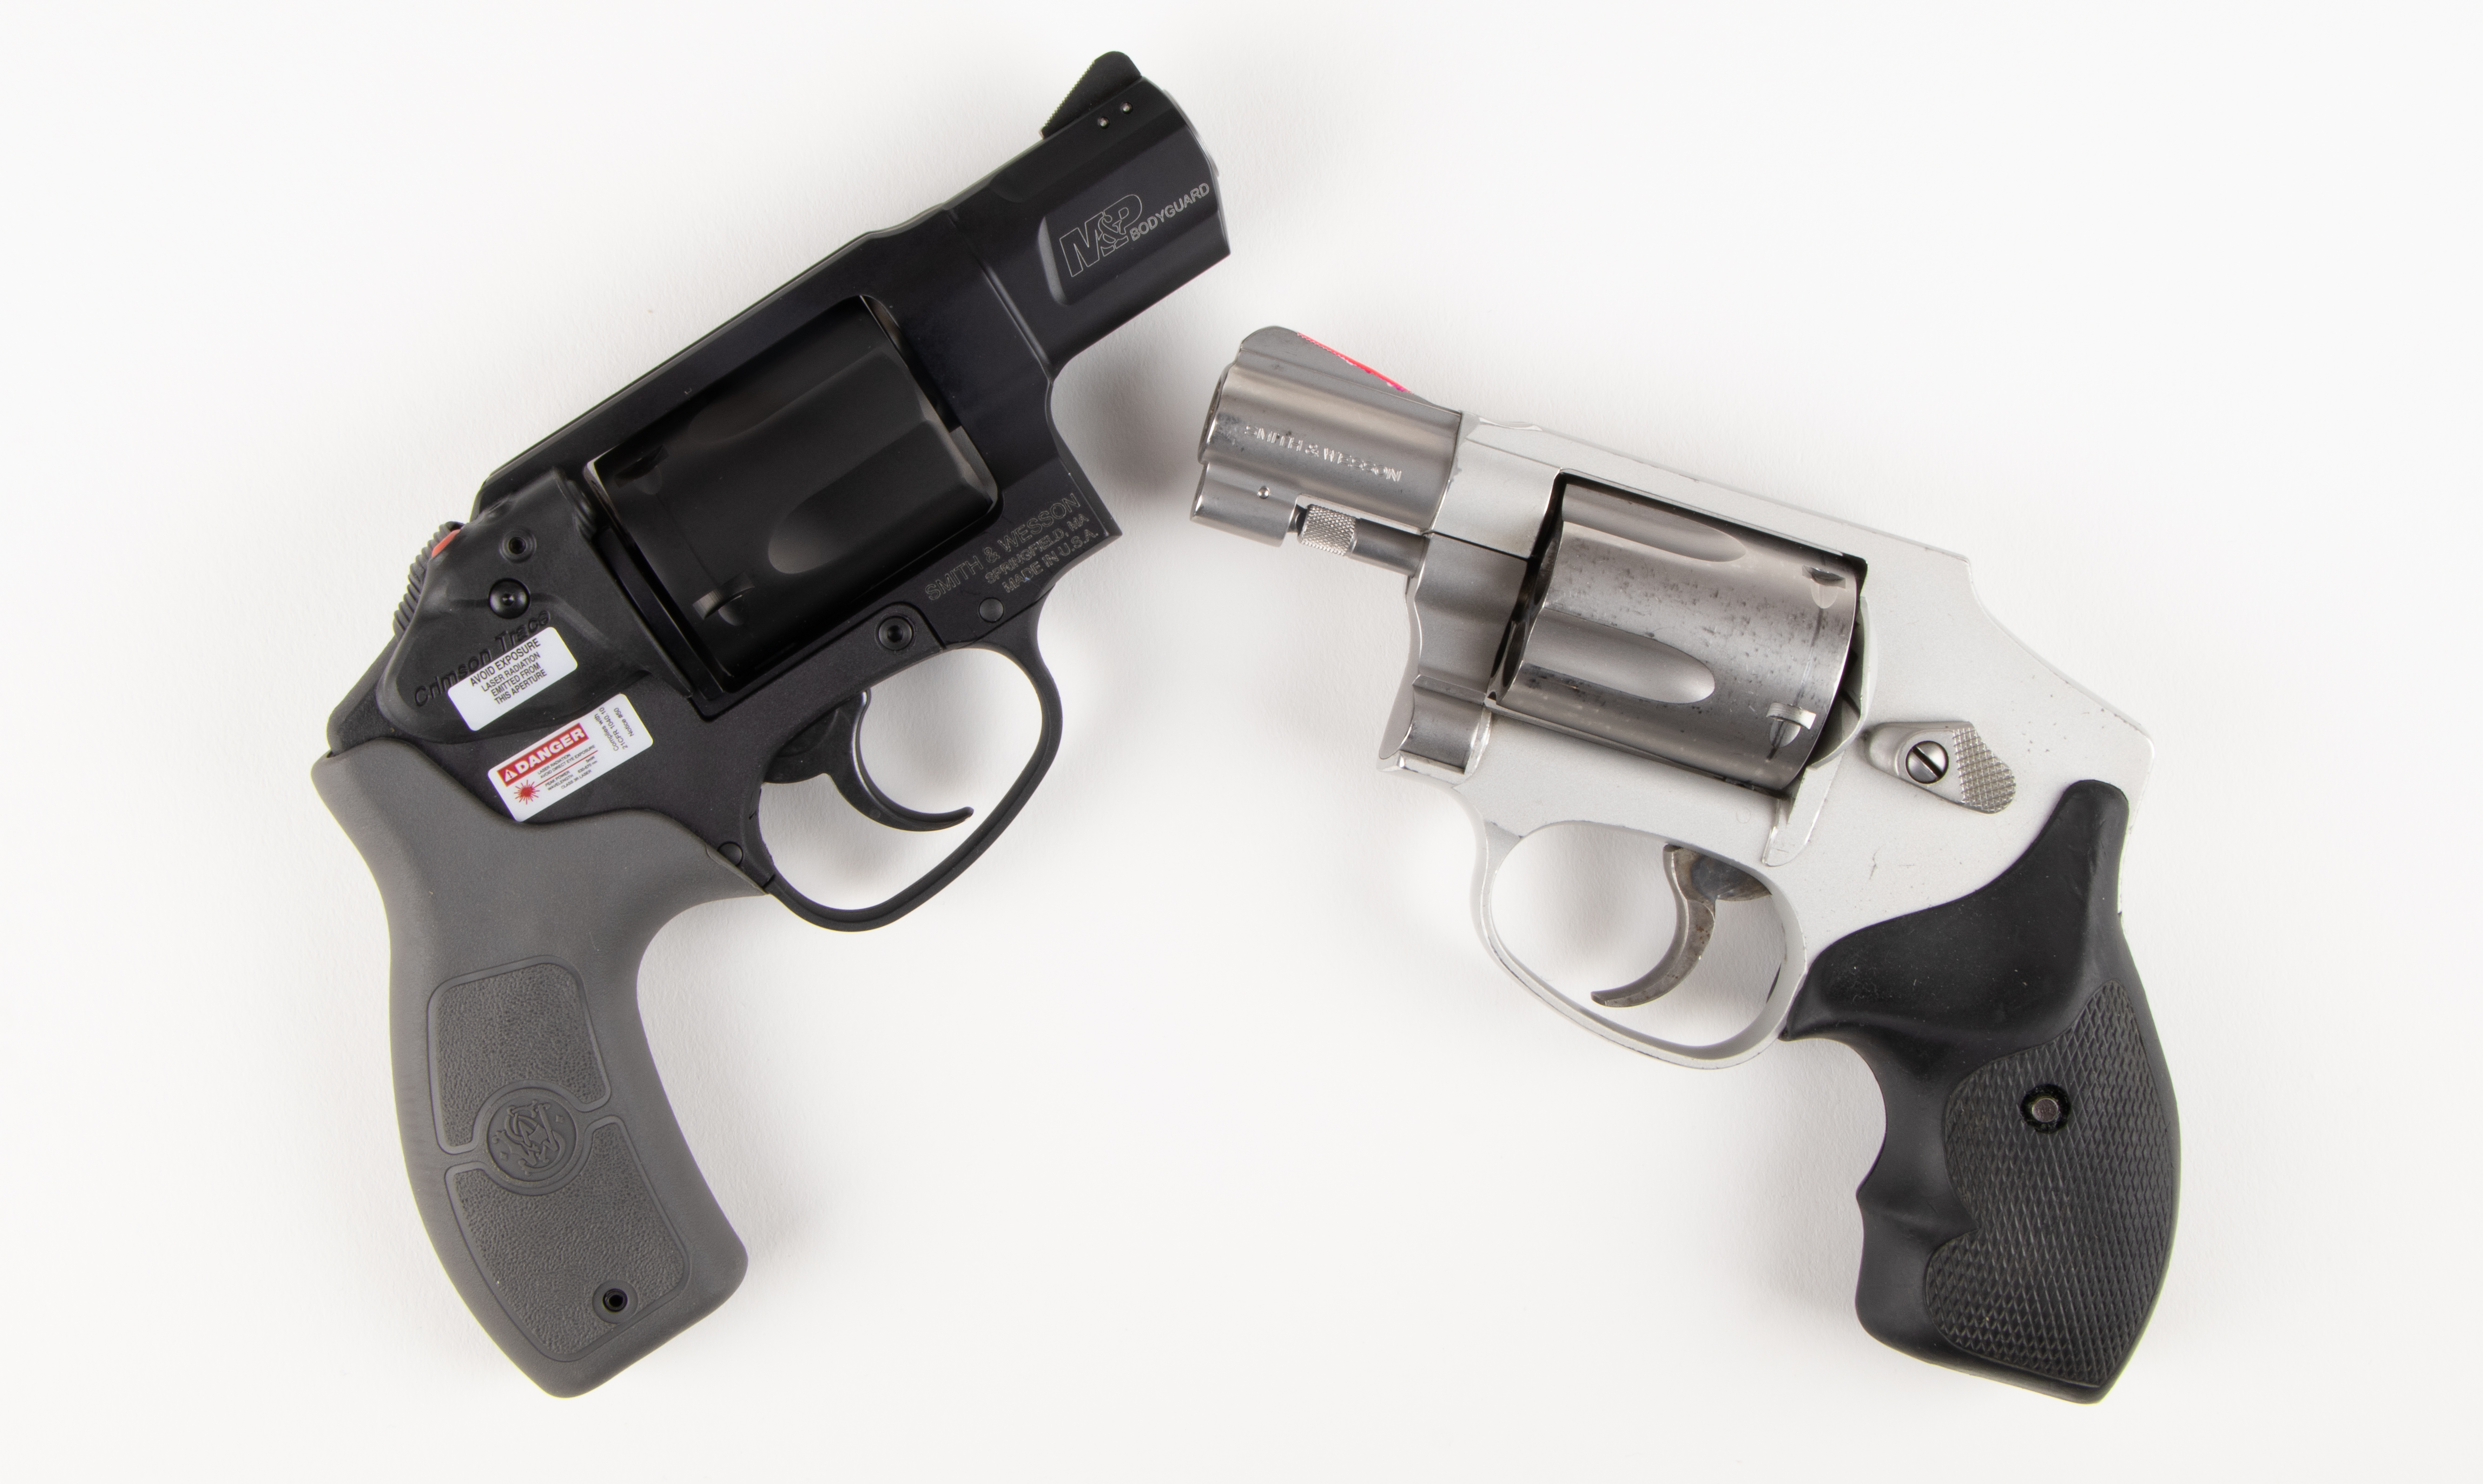 Head to Head: Smith & Wesson Bodyguard 38 vs. Model 642 | An